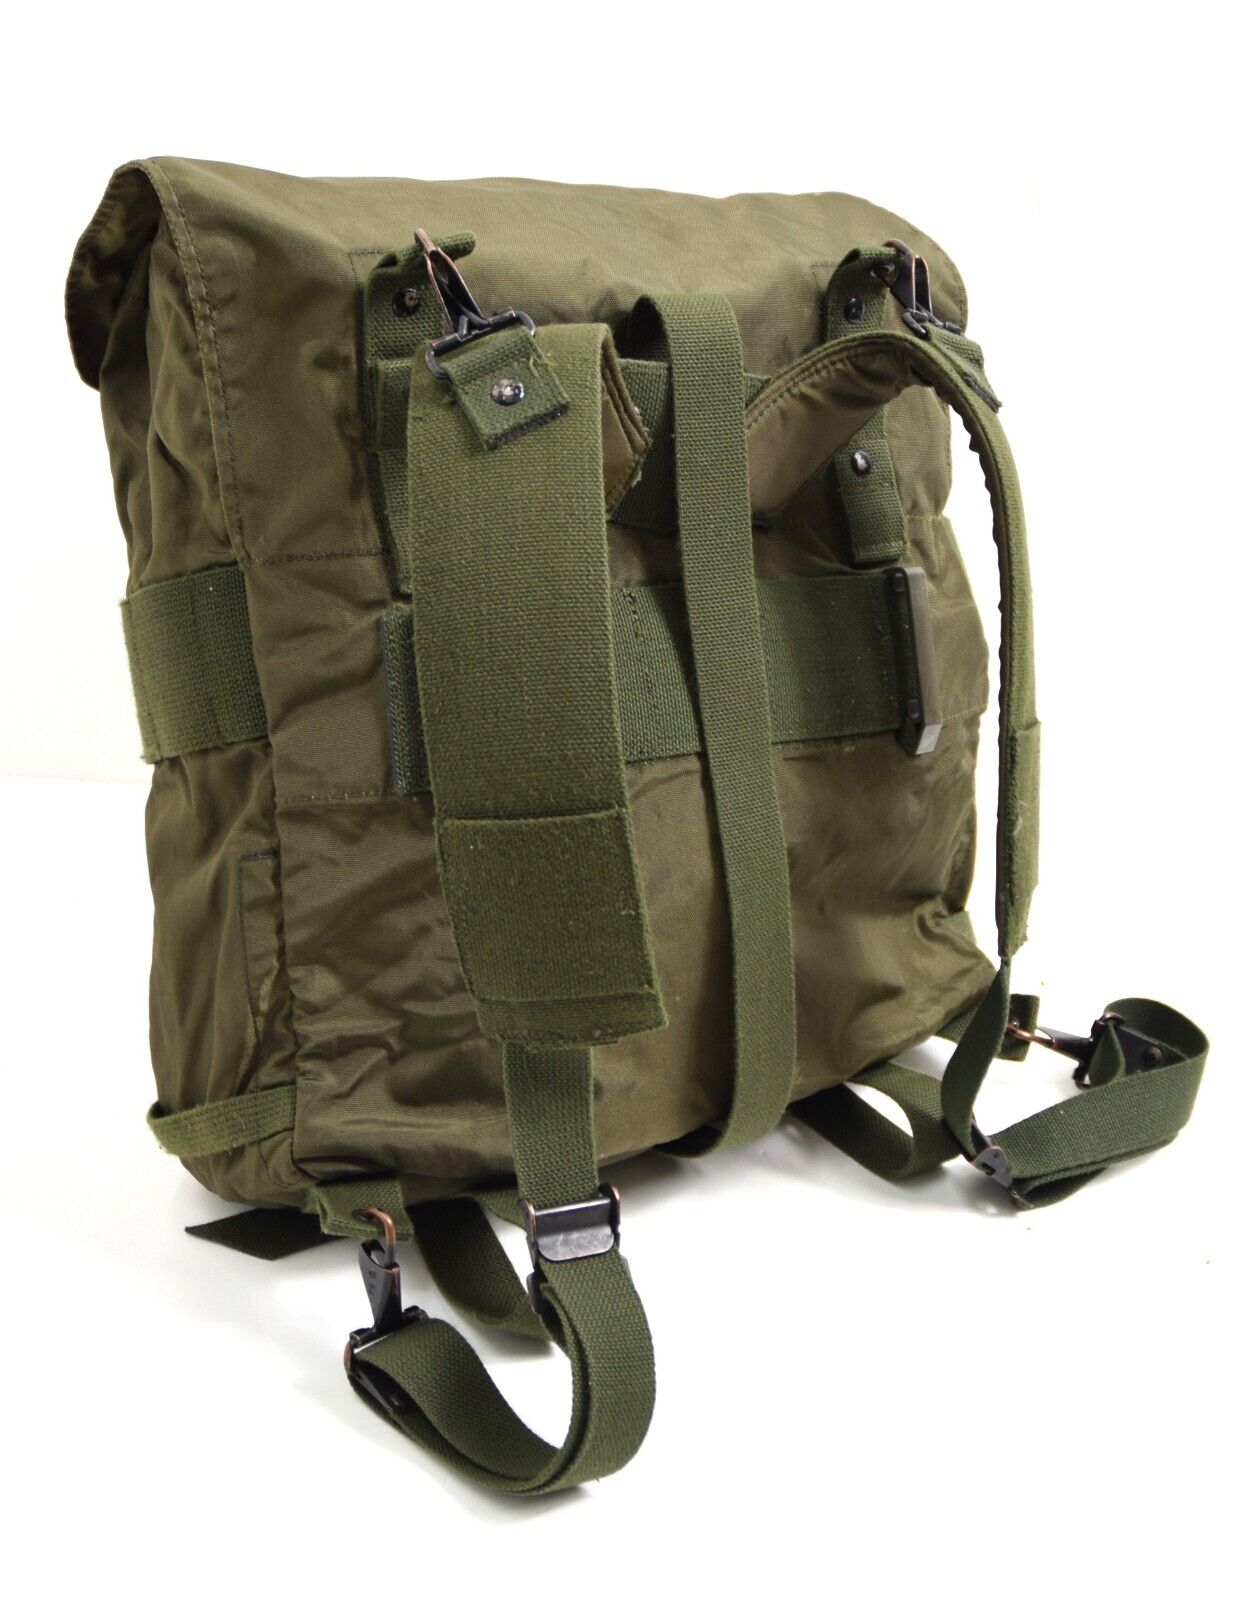 Austrian Army Pilots Backpack Small Rucksack Bag Used Military Surplus Para Bag